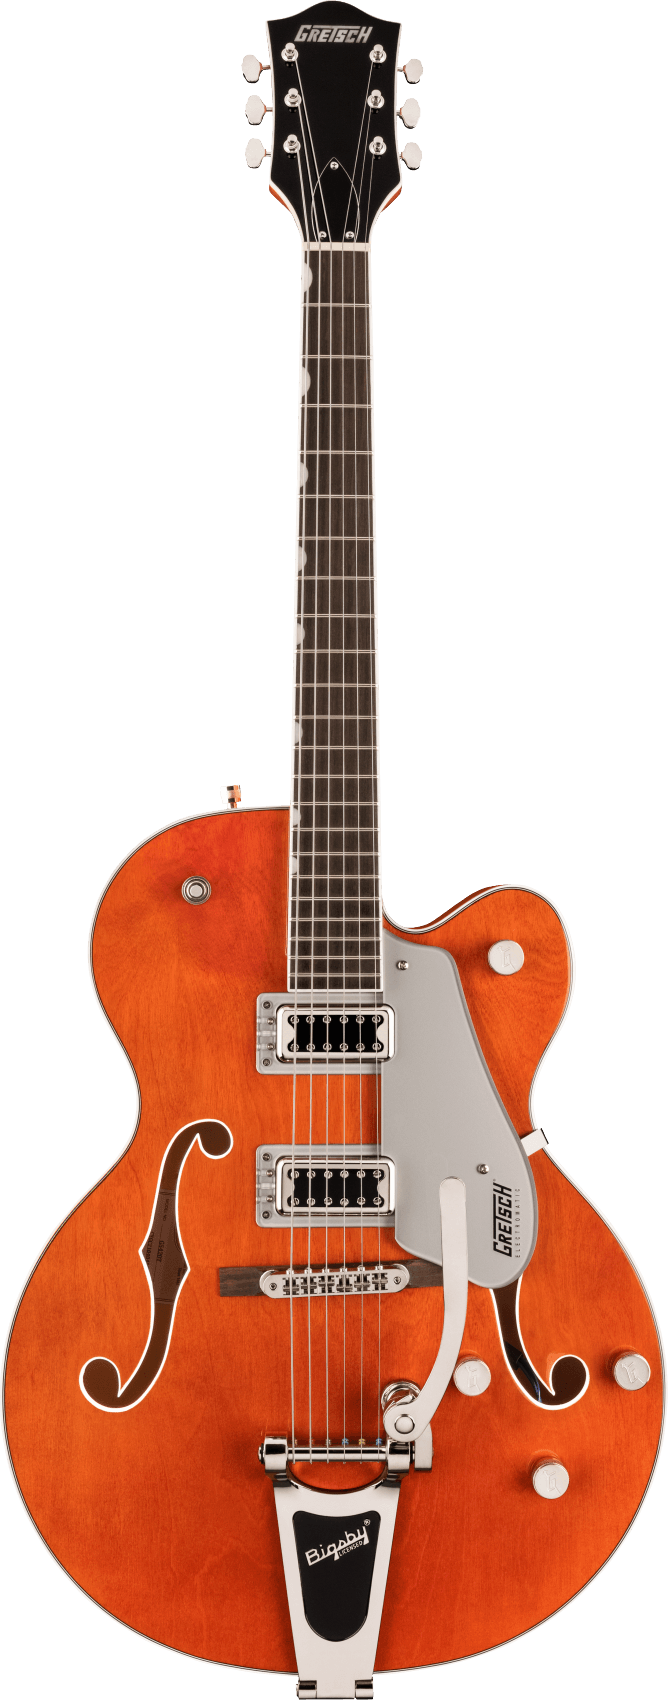 Gretsch G5420T Electromatic Classic Hollowbody Single Cut Electric Guitar - Orange Stain